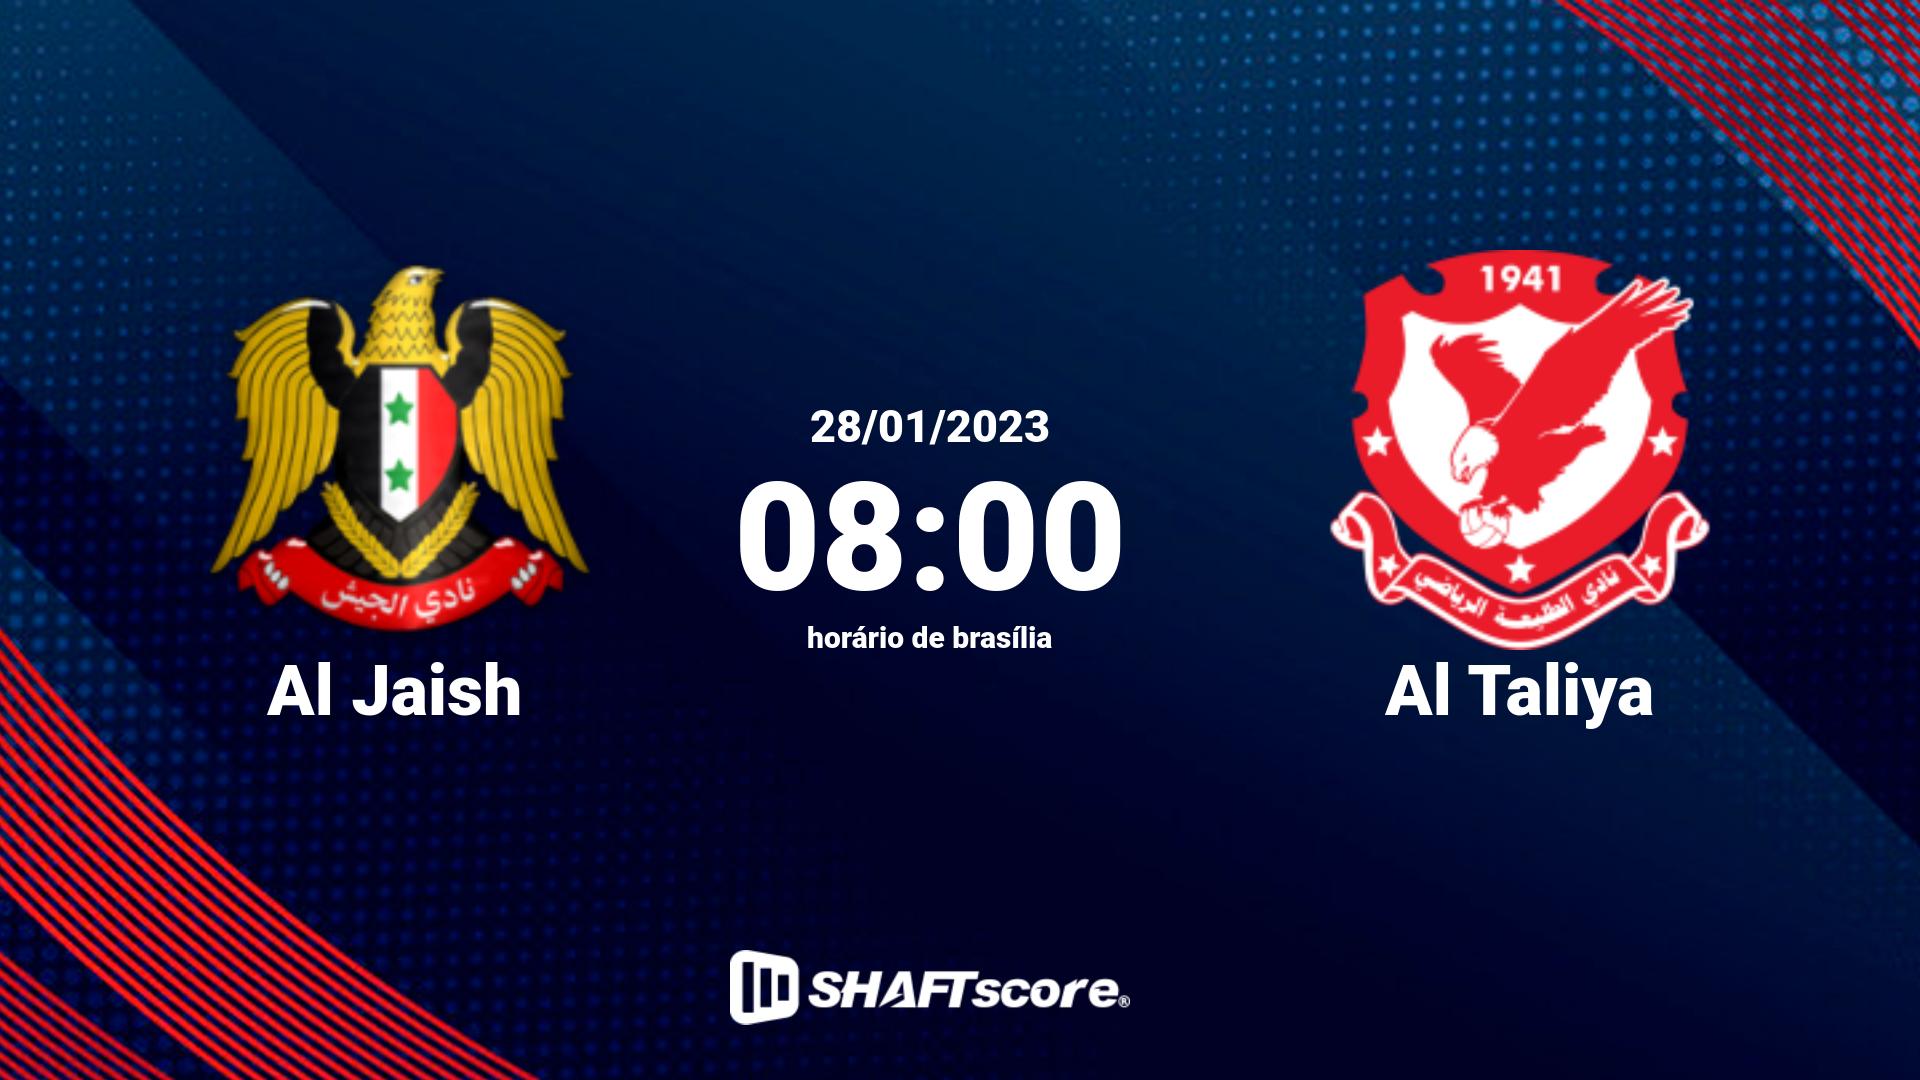 Estatísticas do jogo Al Jaish vs Al Taliya 28.01 08:00